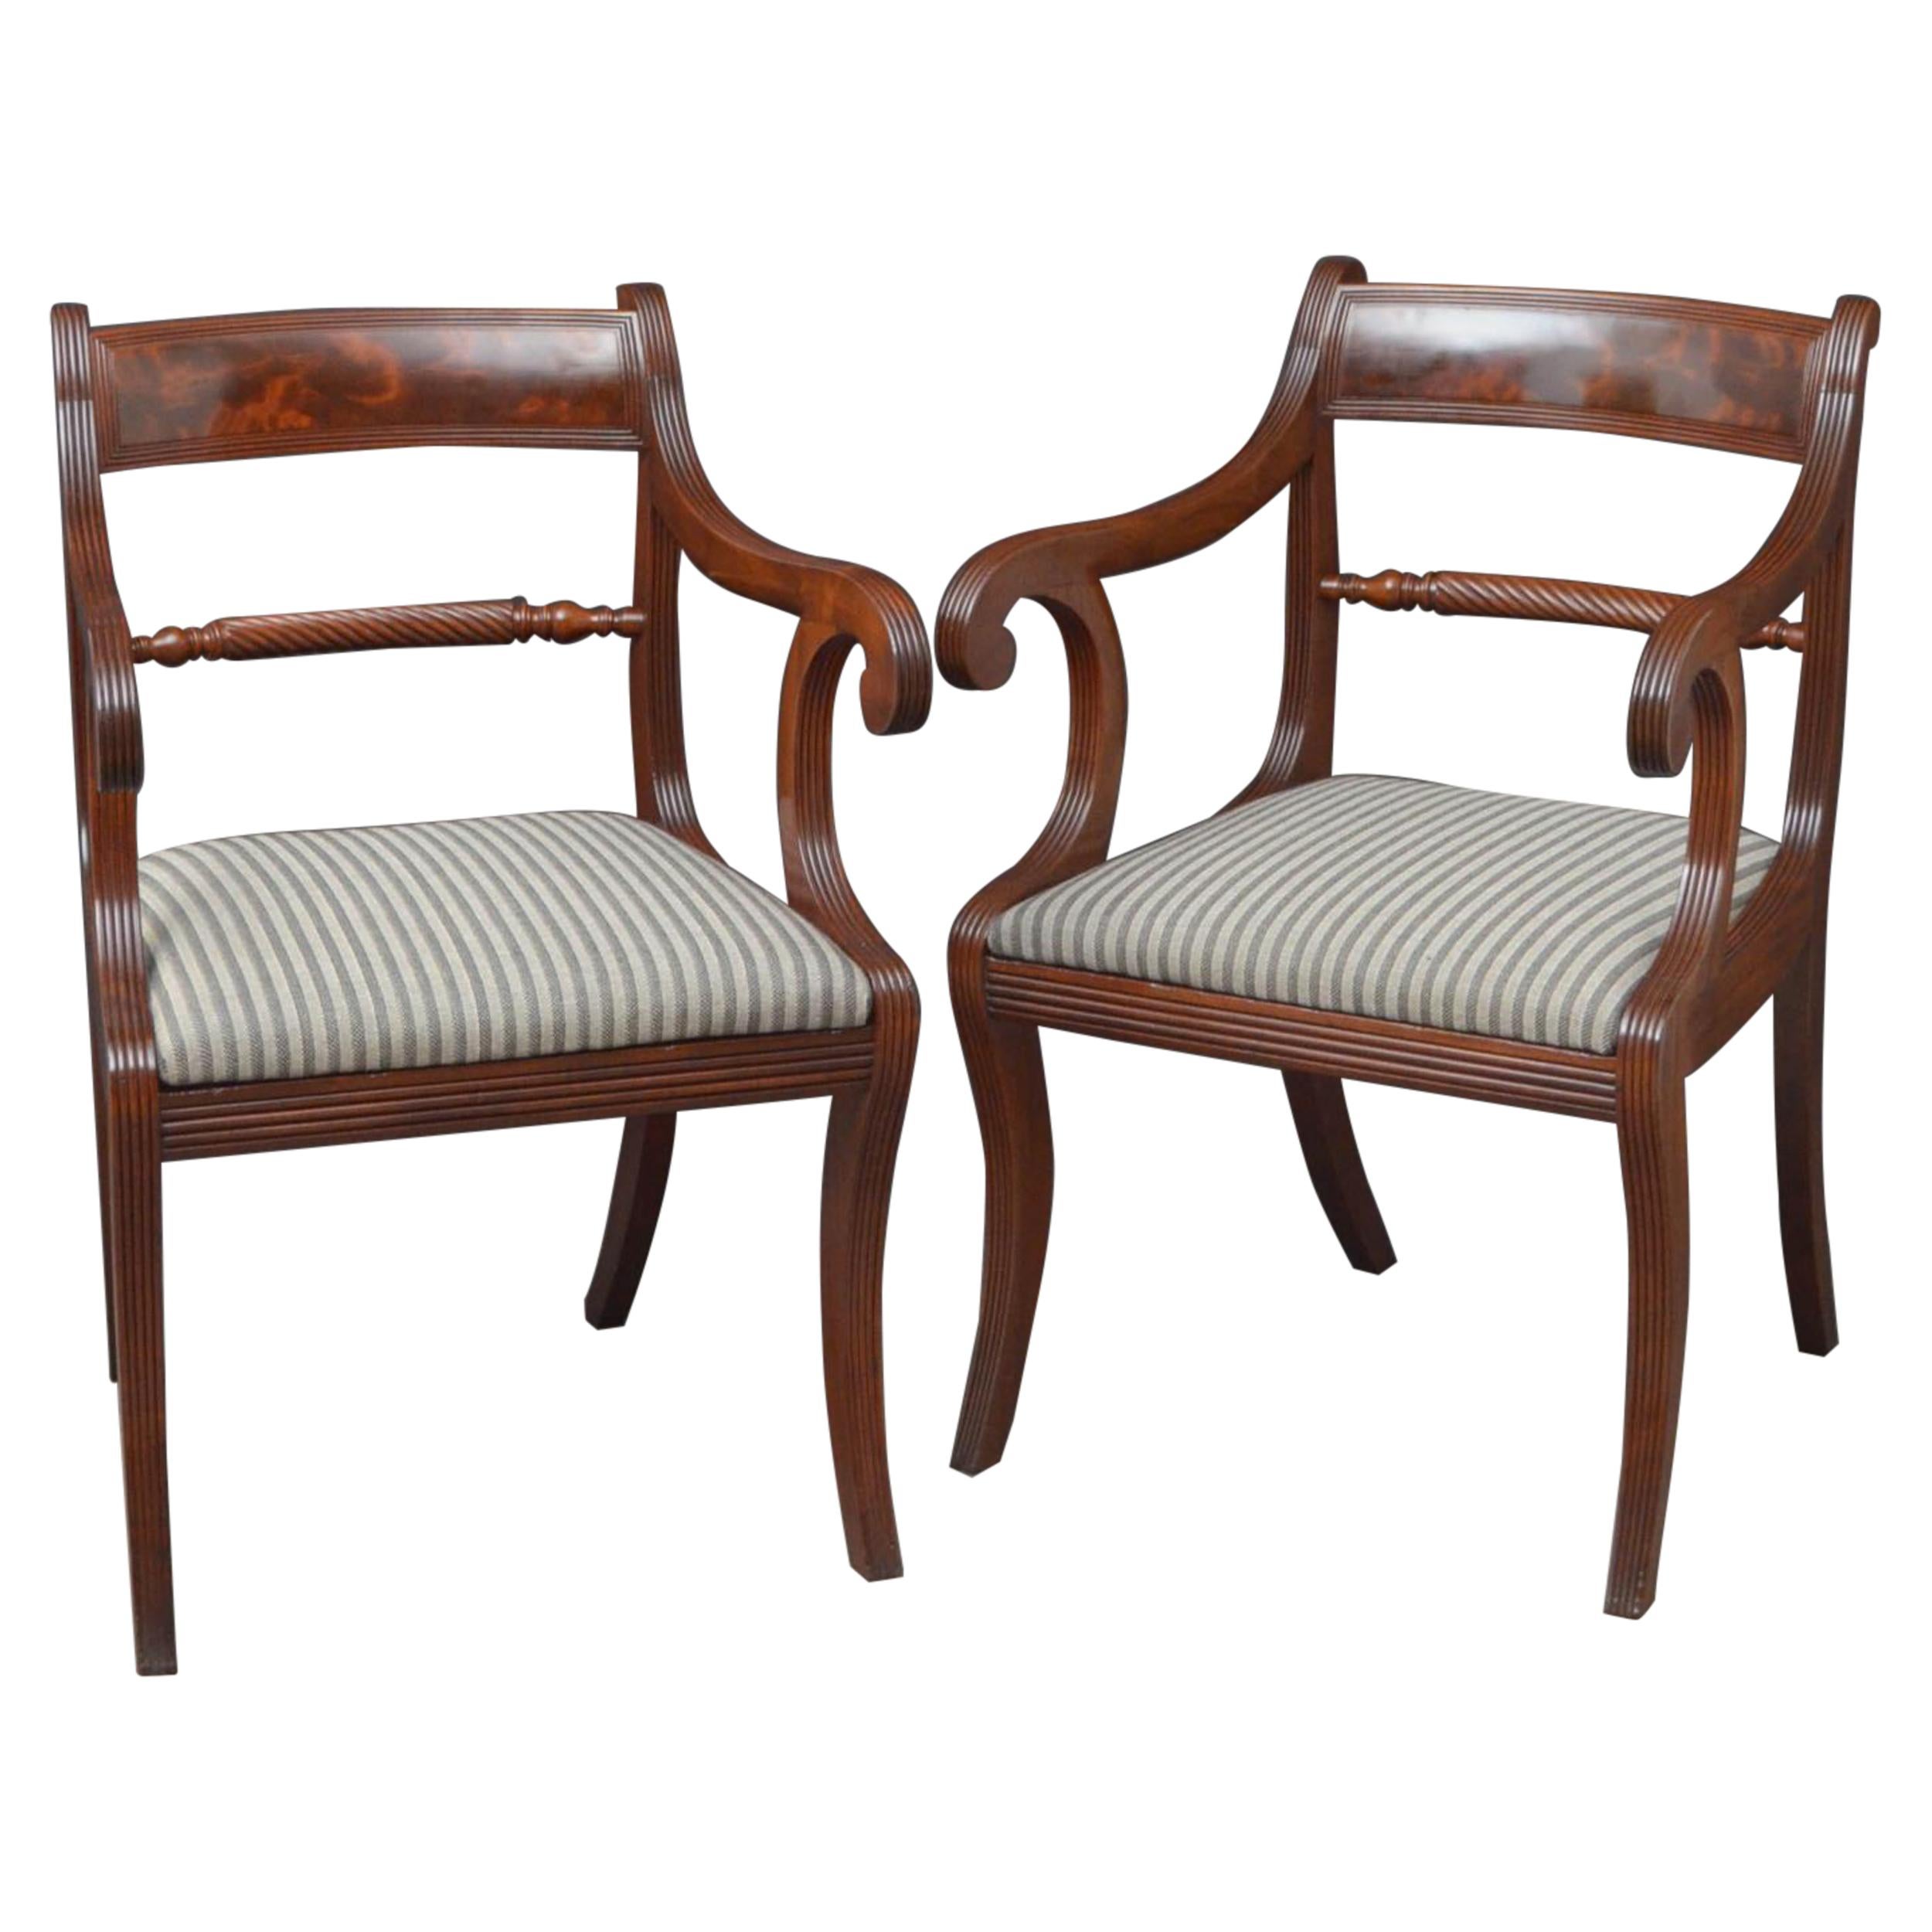 Pair of Regency Carver Chairs in Mahogany